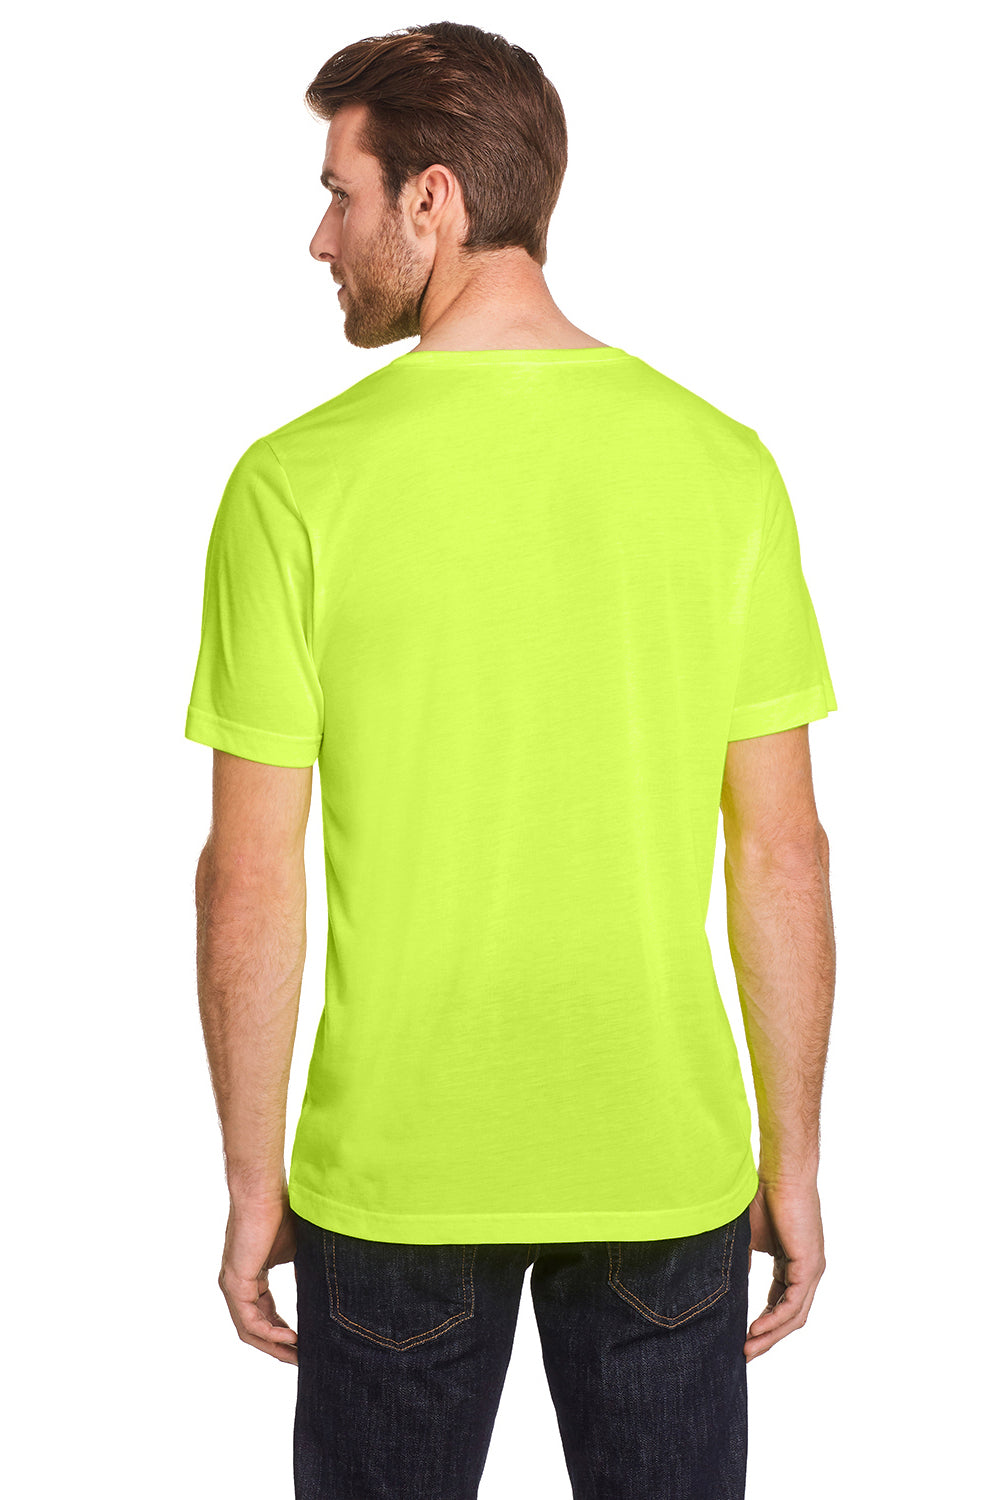 Core 365 CE111 Mens Fusion ChromaSoft Performance Moisture Wicking Short Sleeve Crewneck T-Shirt Safety Yellow Back